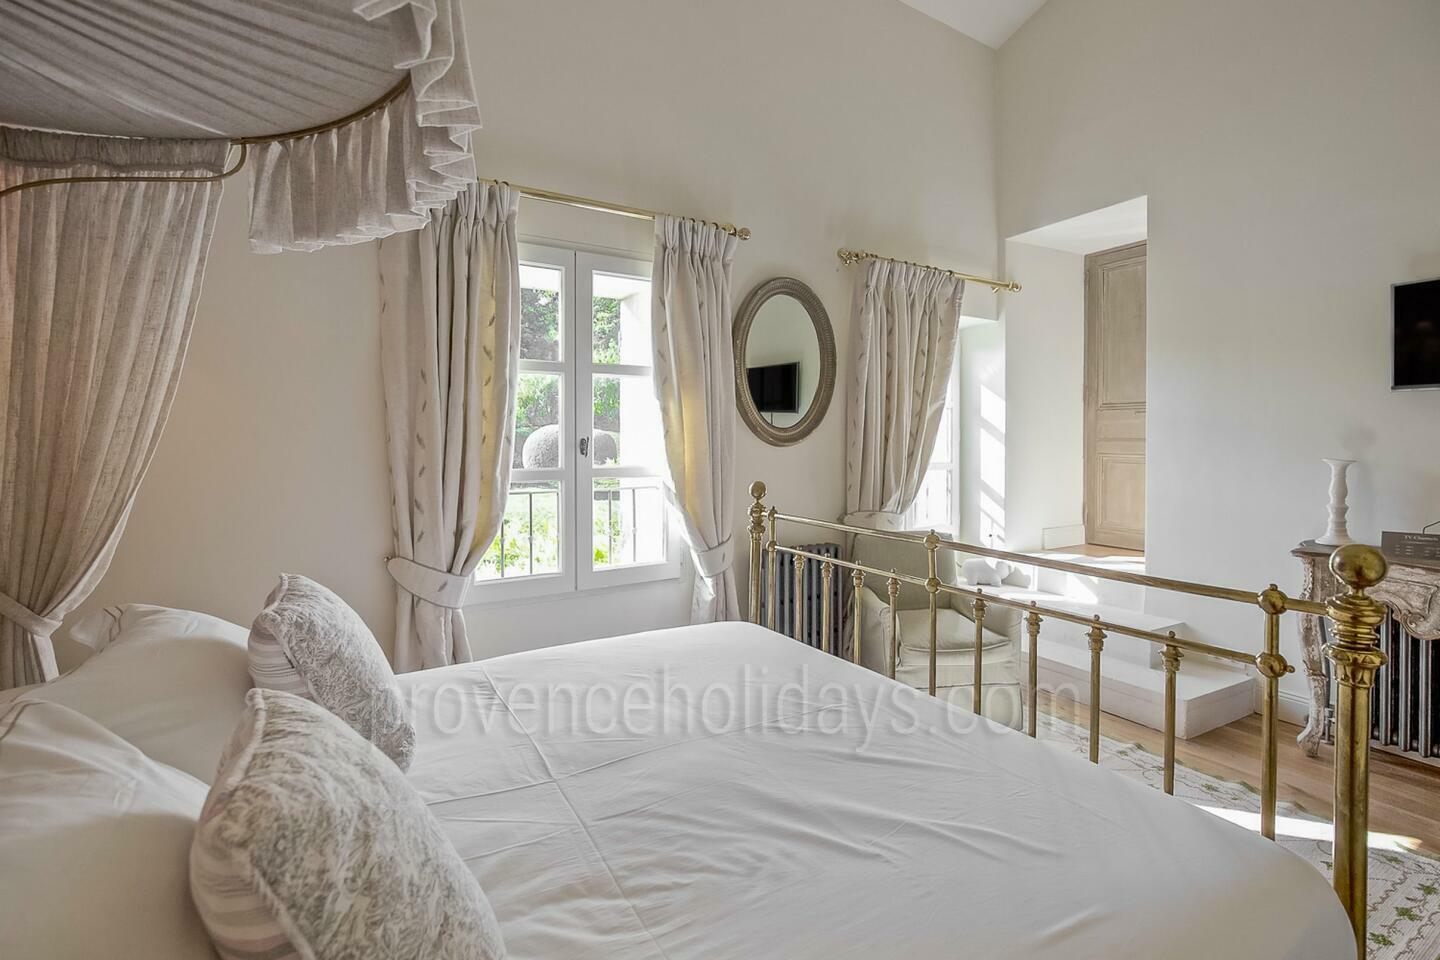 54 - Chez Emile: Villa: Bedroom